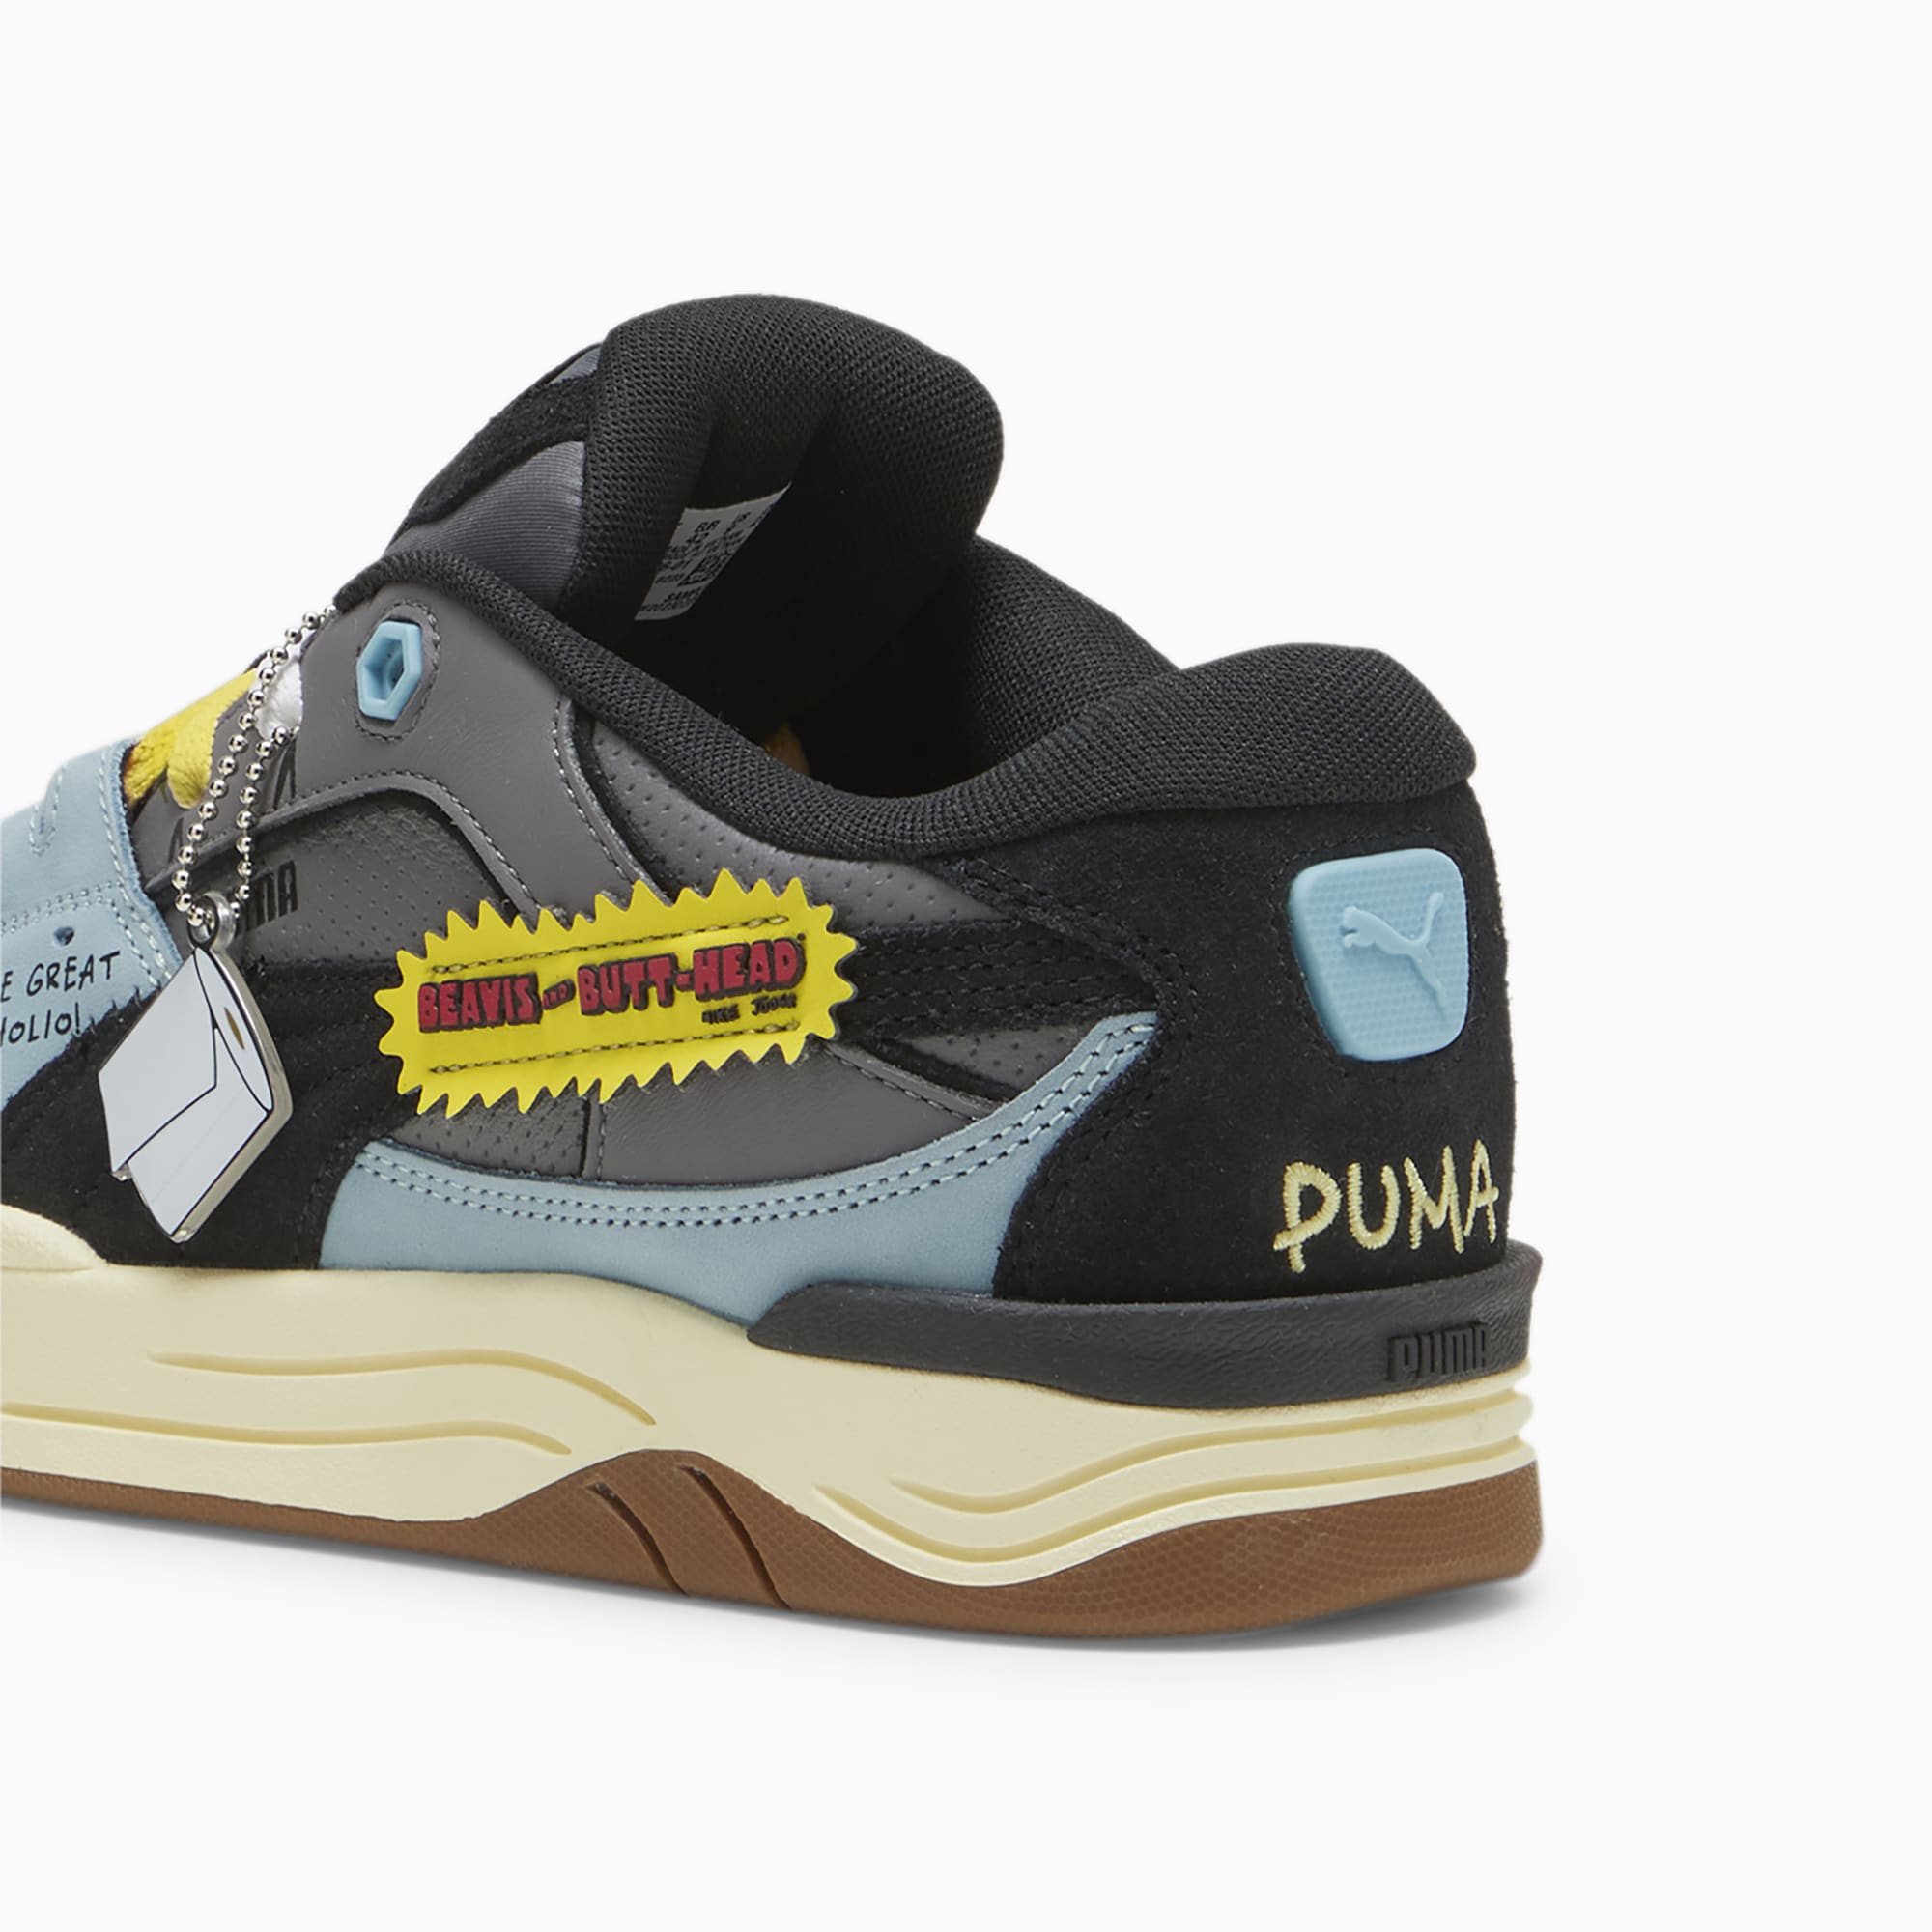 Women's PUMA X Beavis And Butthead PUMA-180 Sneakers, Cool Dark Grey/Black, Size 35,5, Shoes